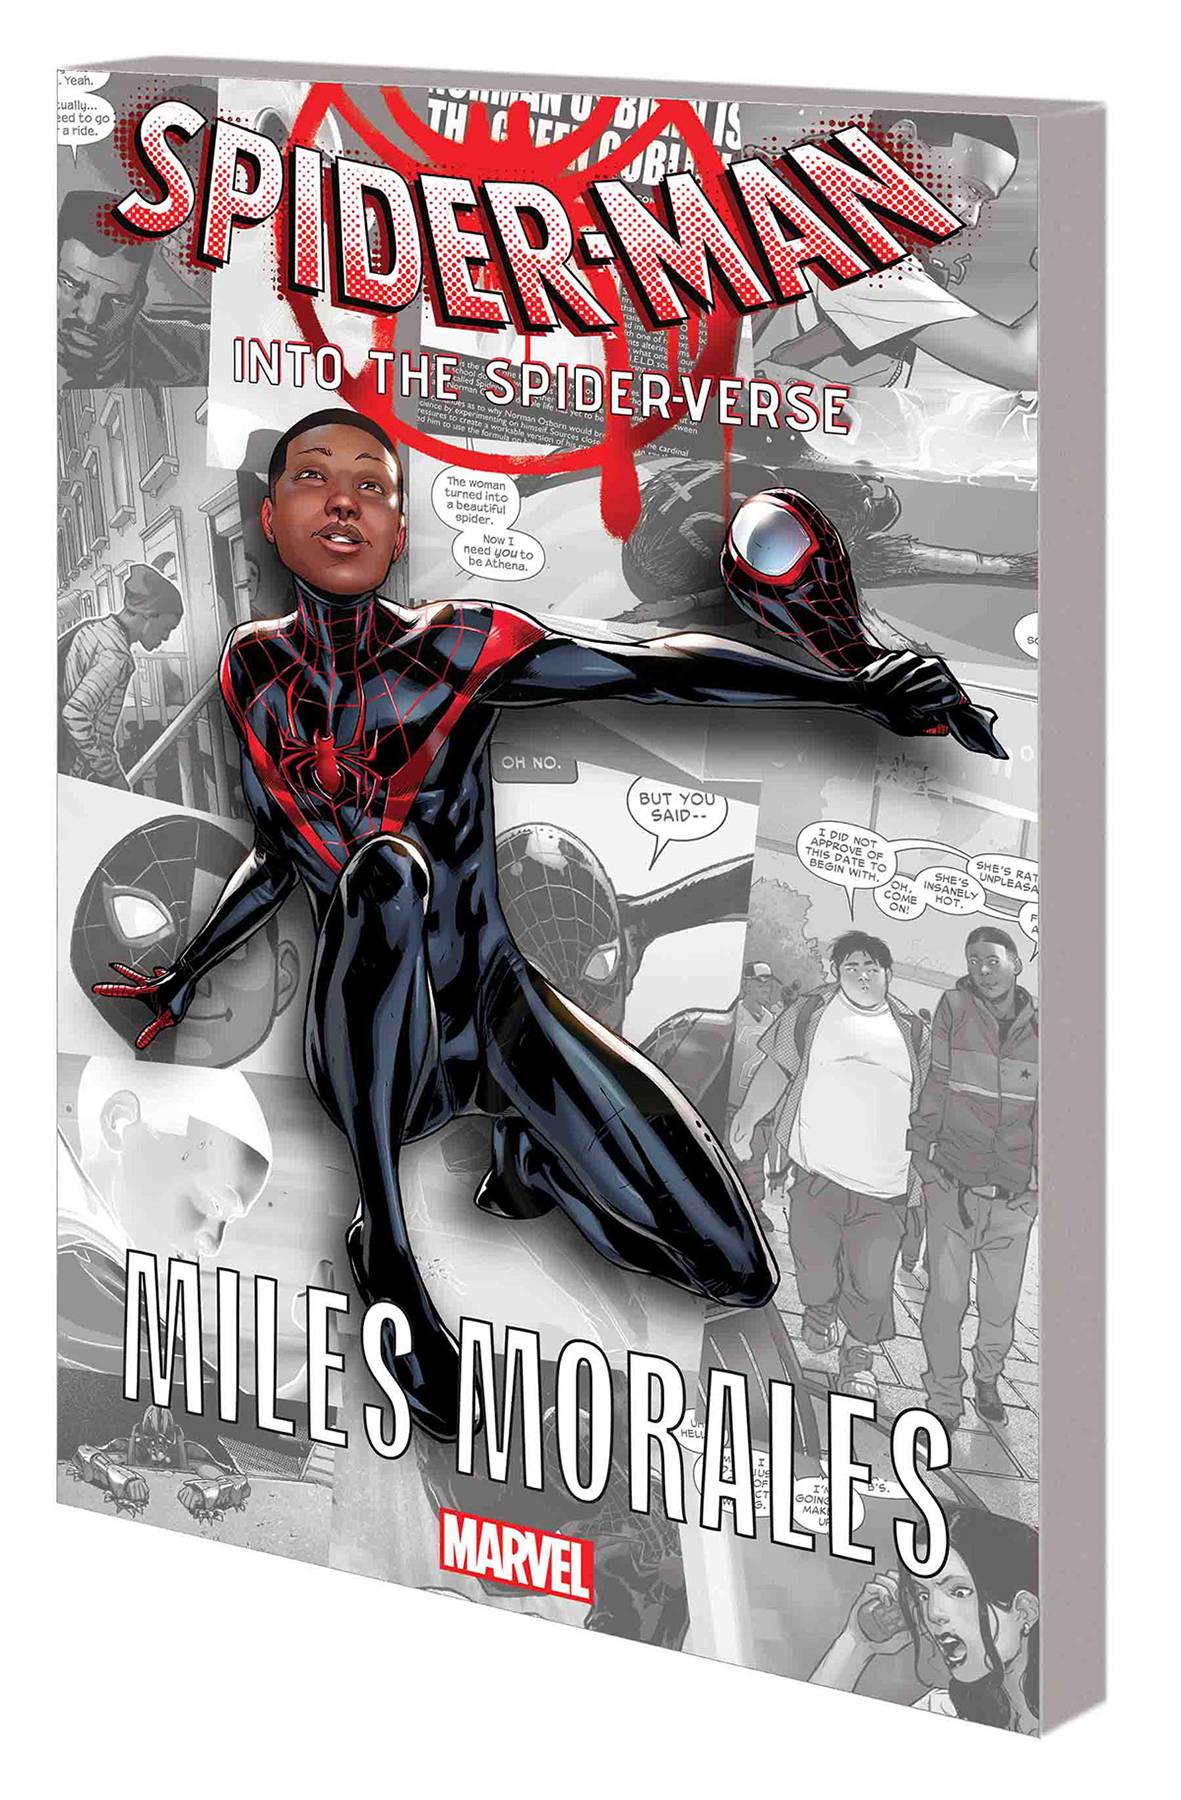 SPIDER-MAN SPIDER-VERSE: MILES MORALES